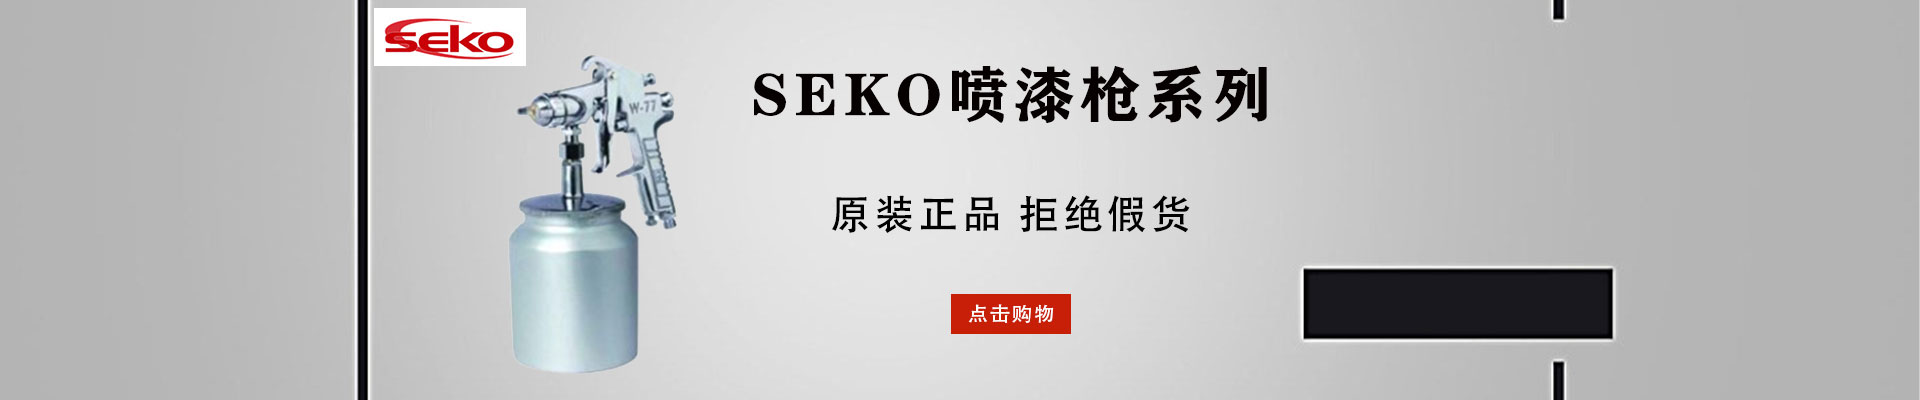 SEKO|气动工具